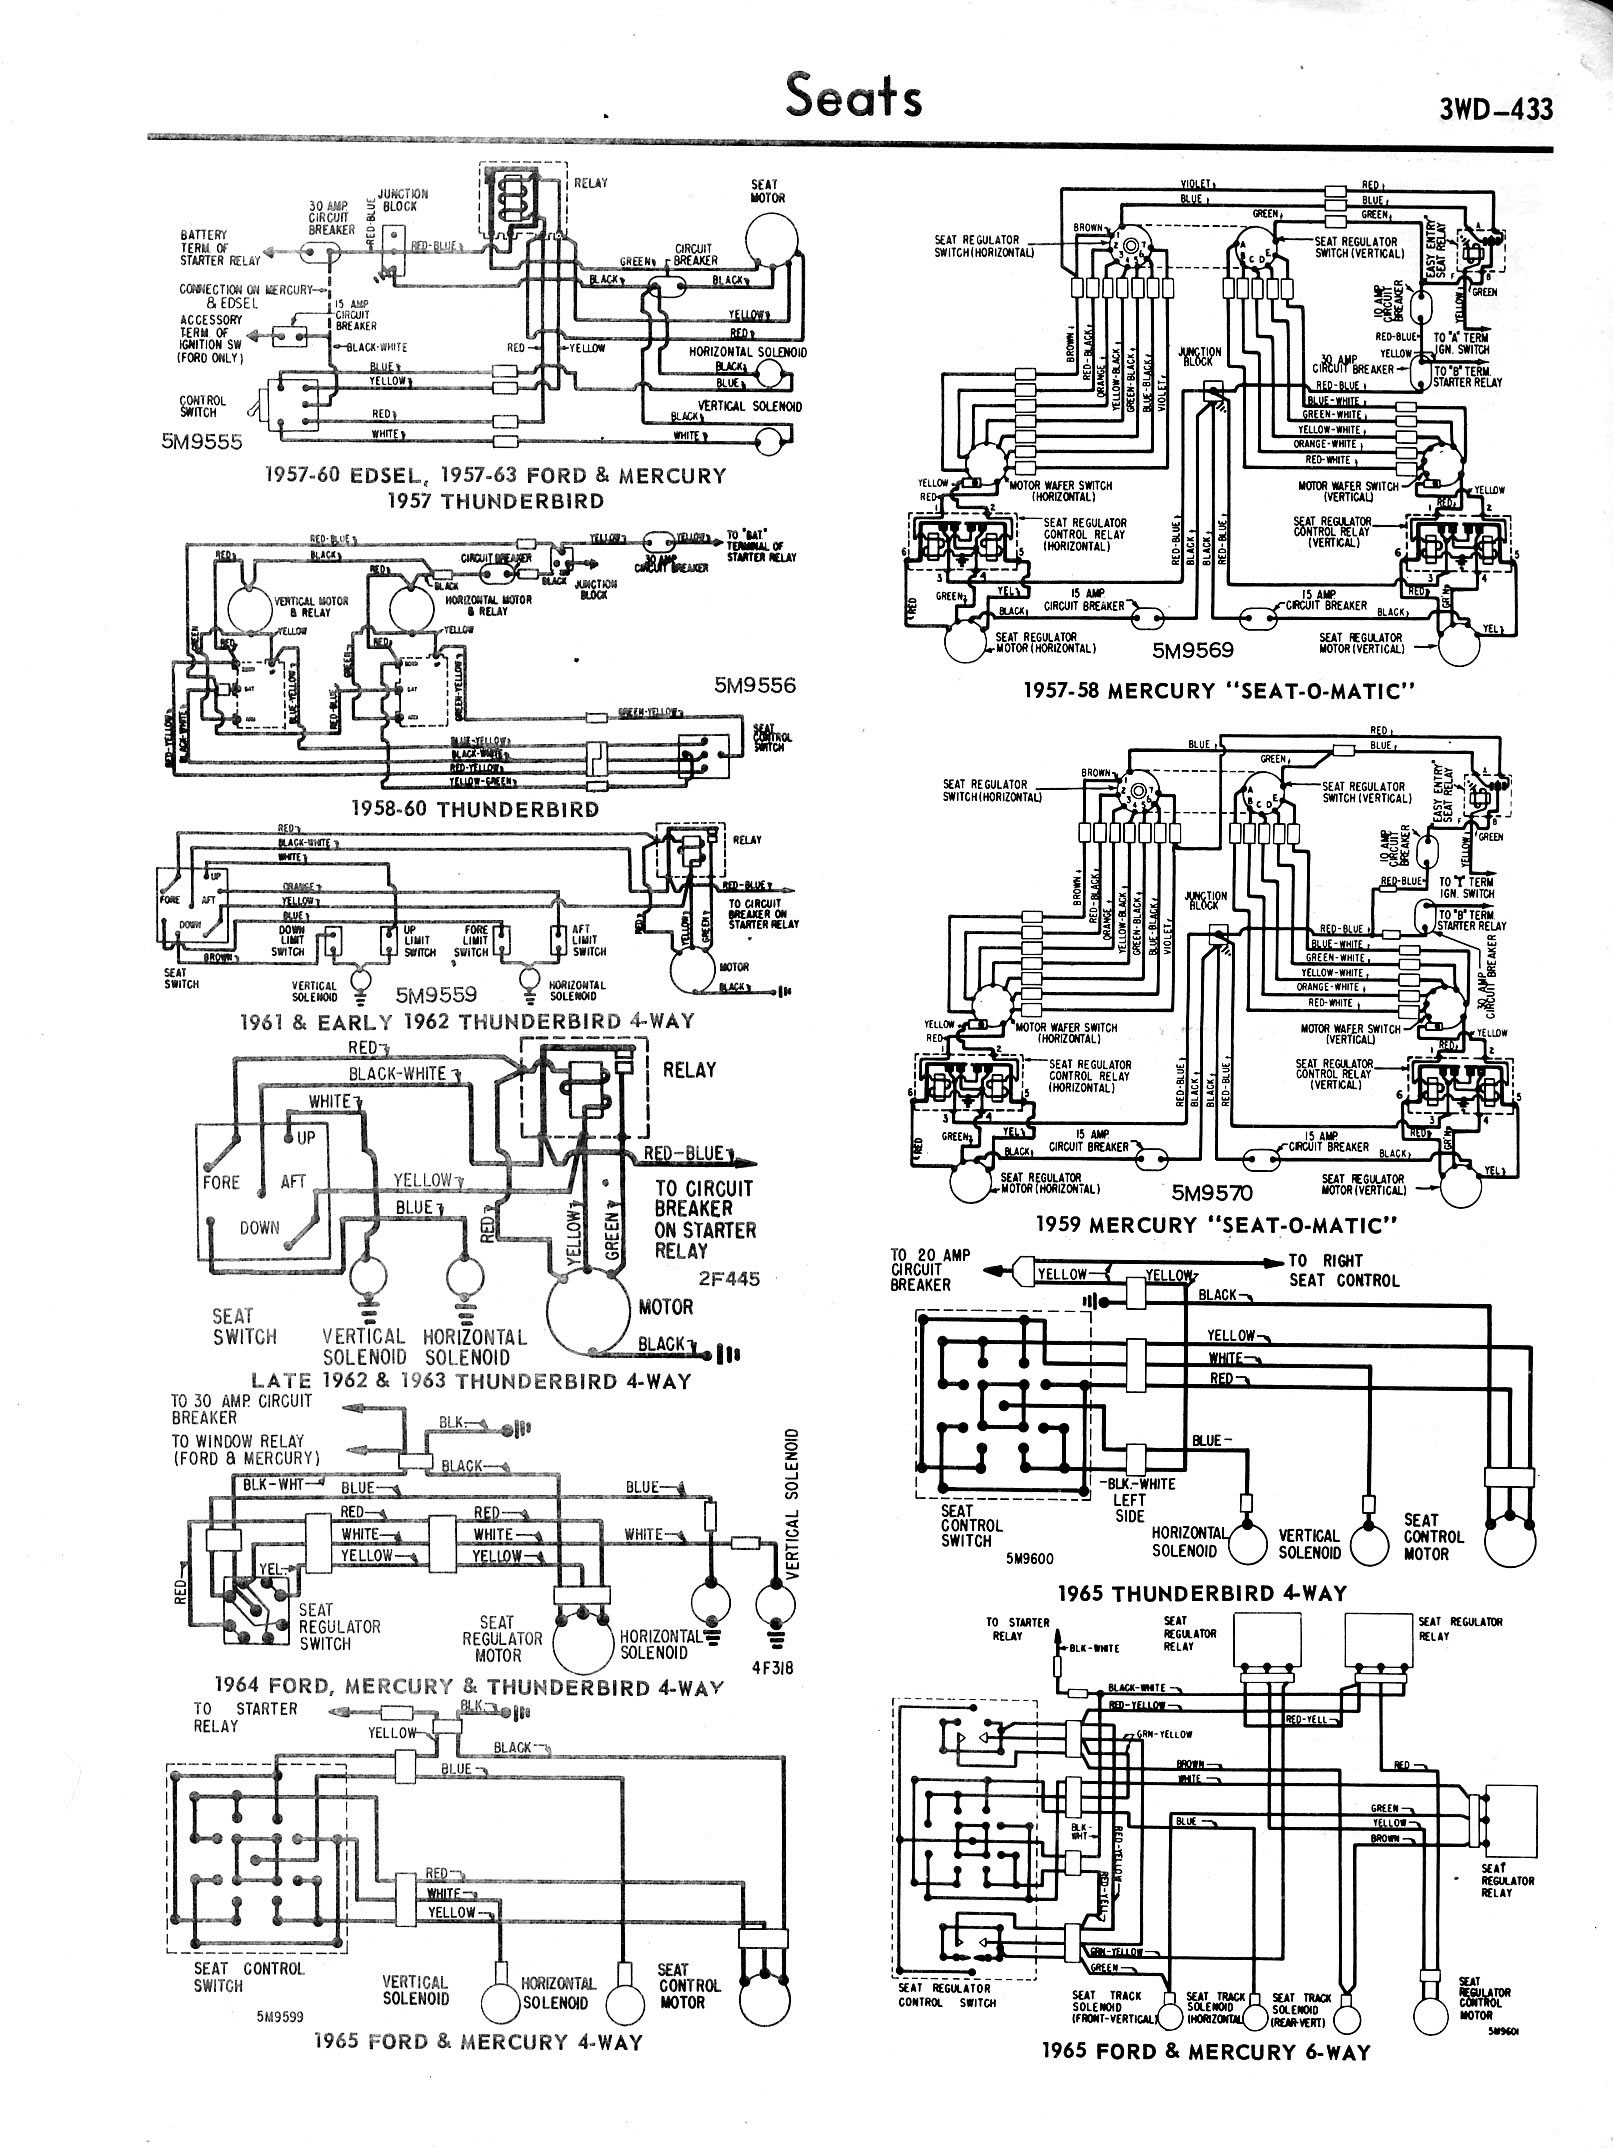 Ford Power Seat Wiring Diagram Images - Wiring Diagram Sample